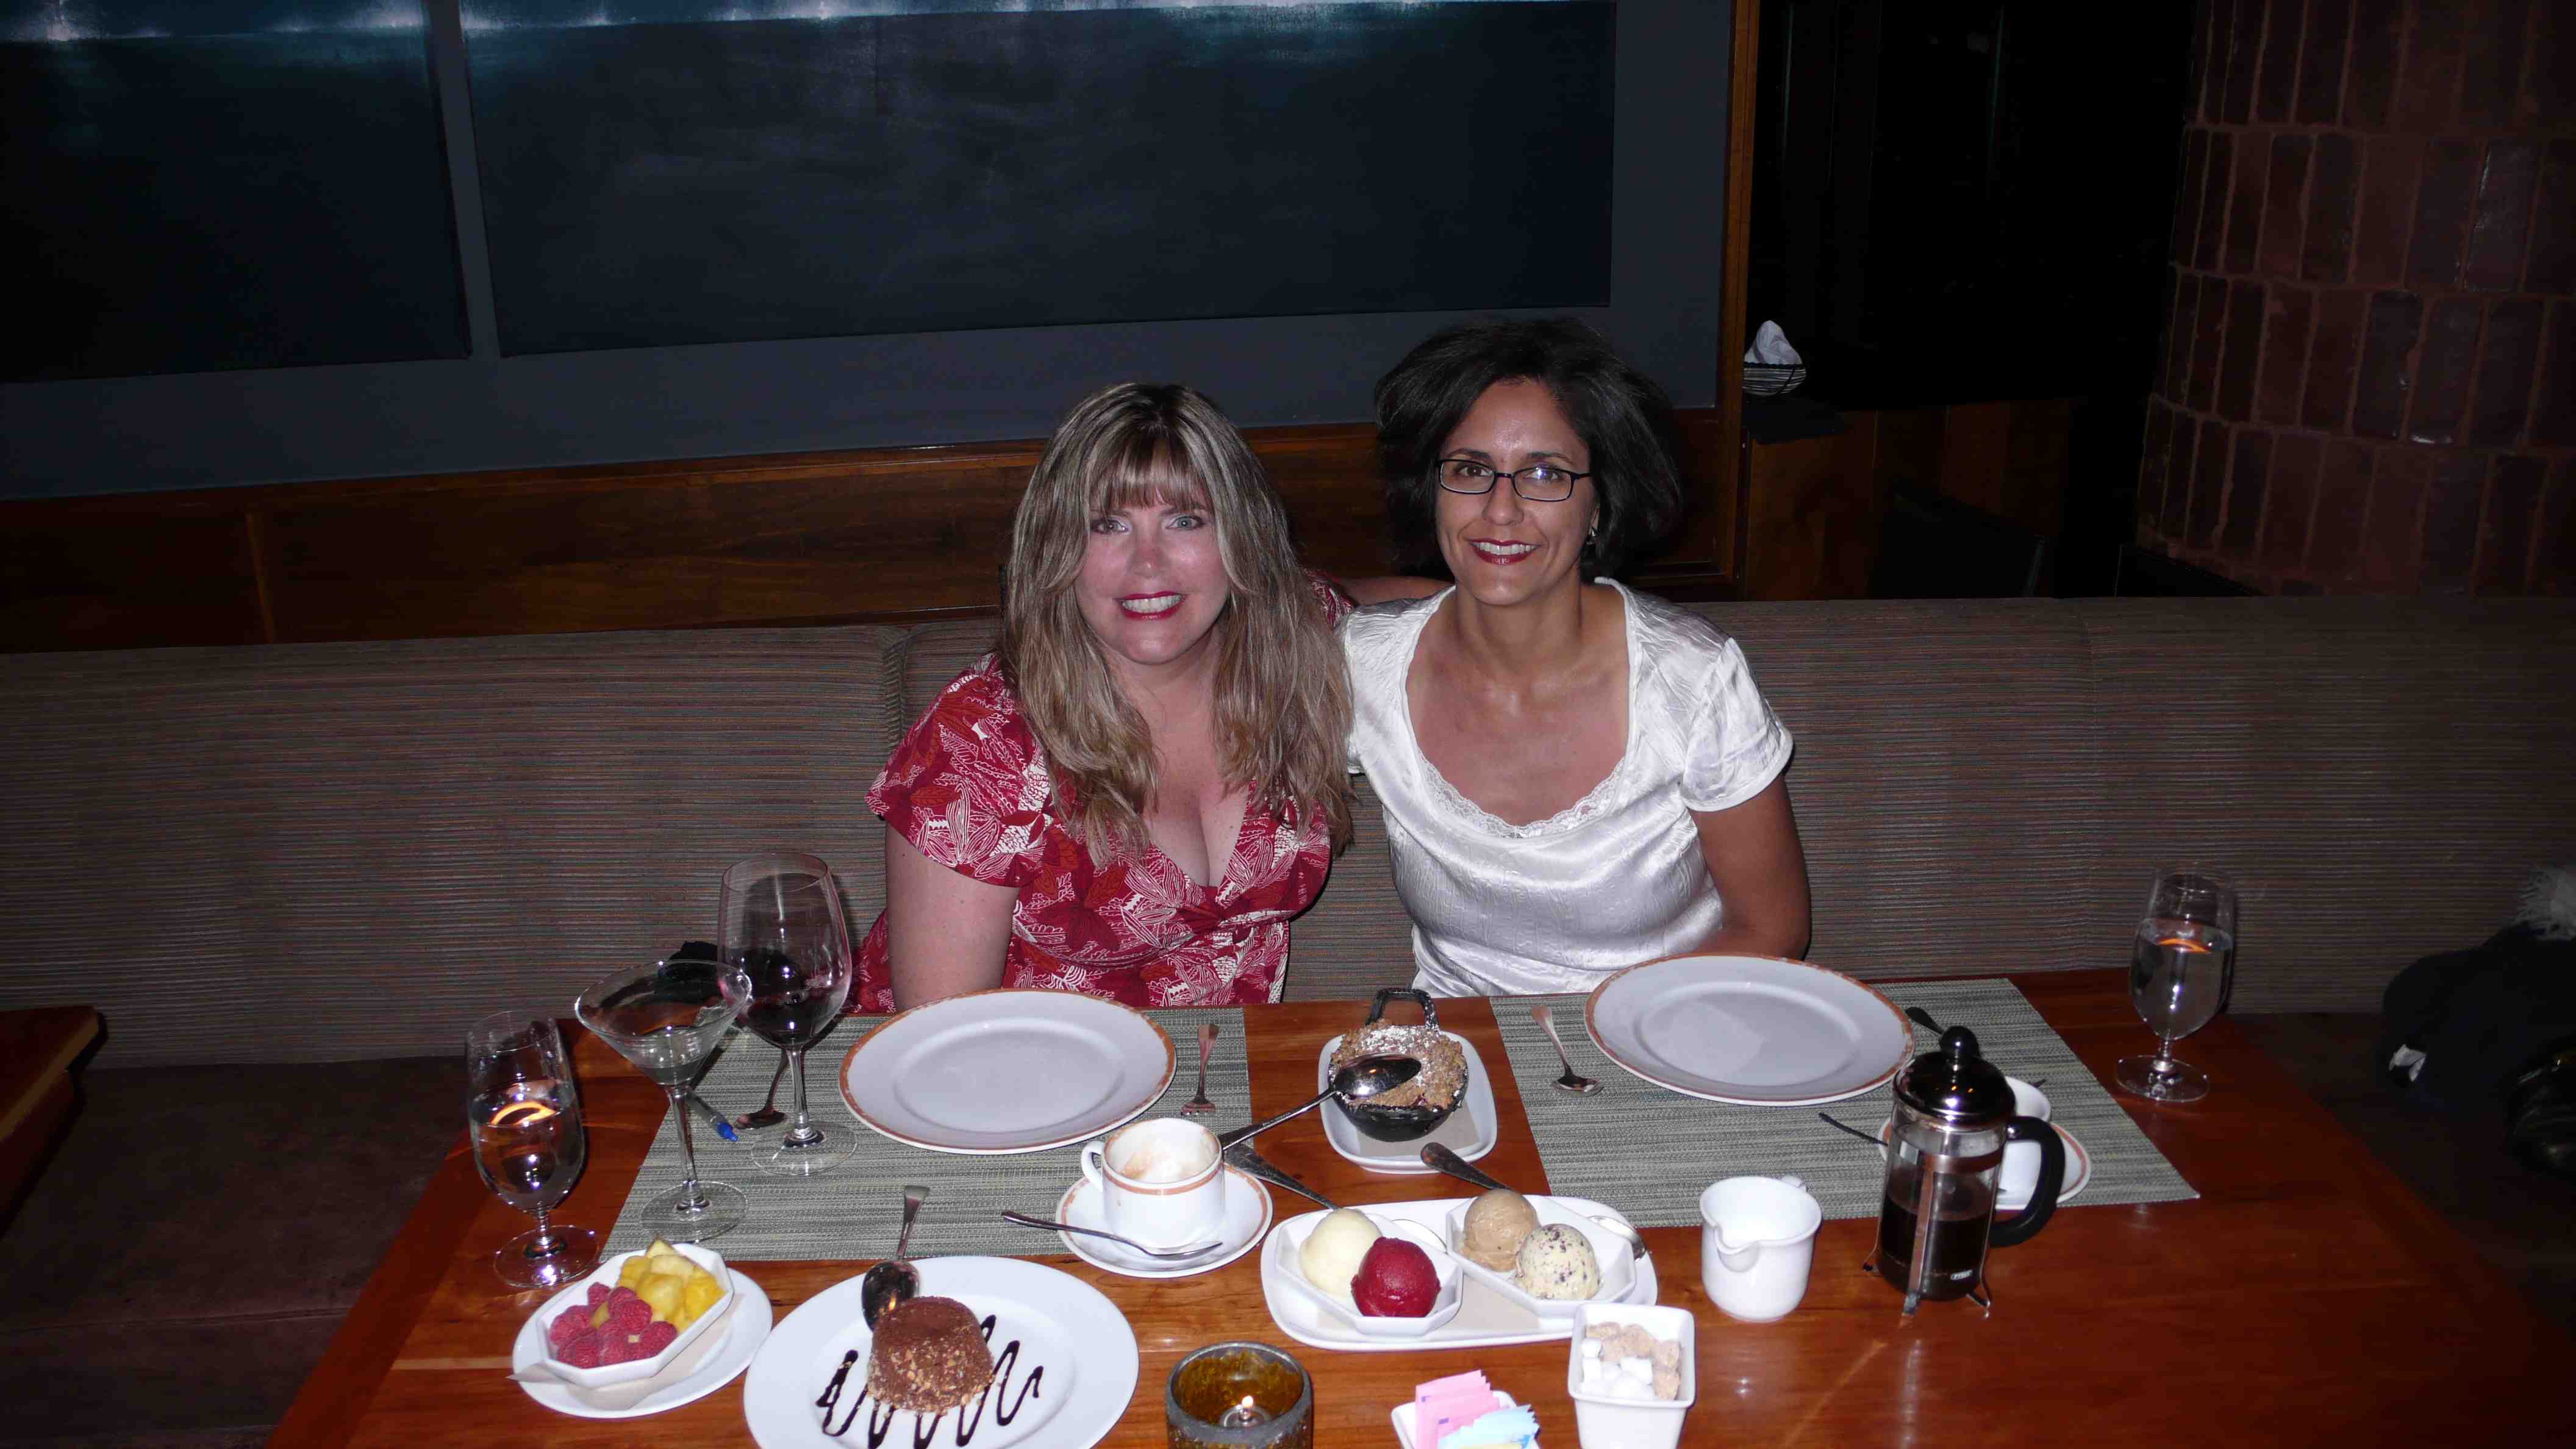 Enjoying dessert with my friend Sheila